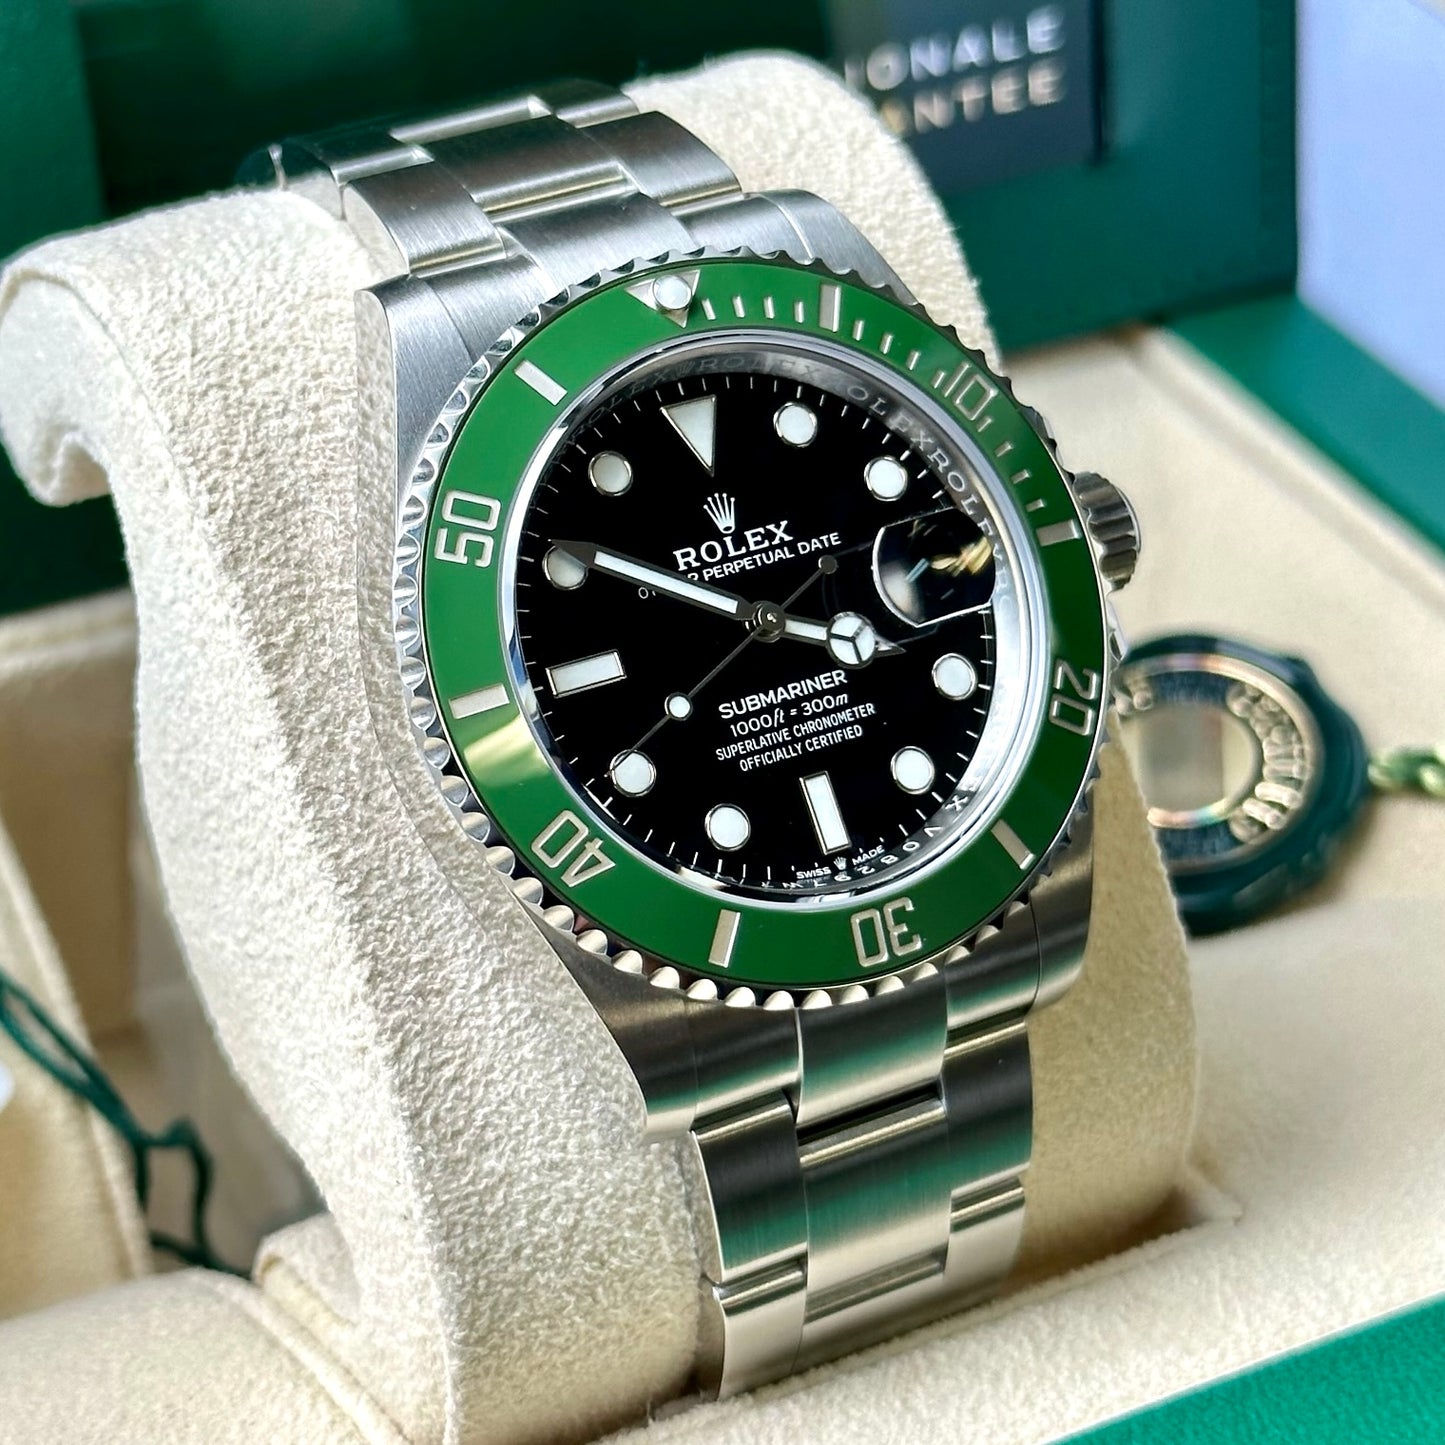 BRAND NEW Rolex 126610LV SUBMARINER GREEN BEZEL BLACK DIAL 41MM 2020  RELEASE FULL SET - Takuya Watches